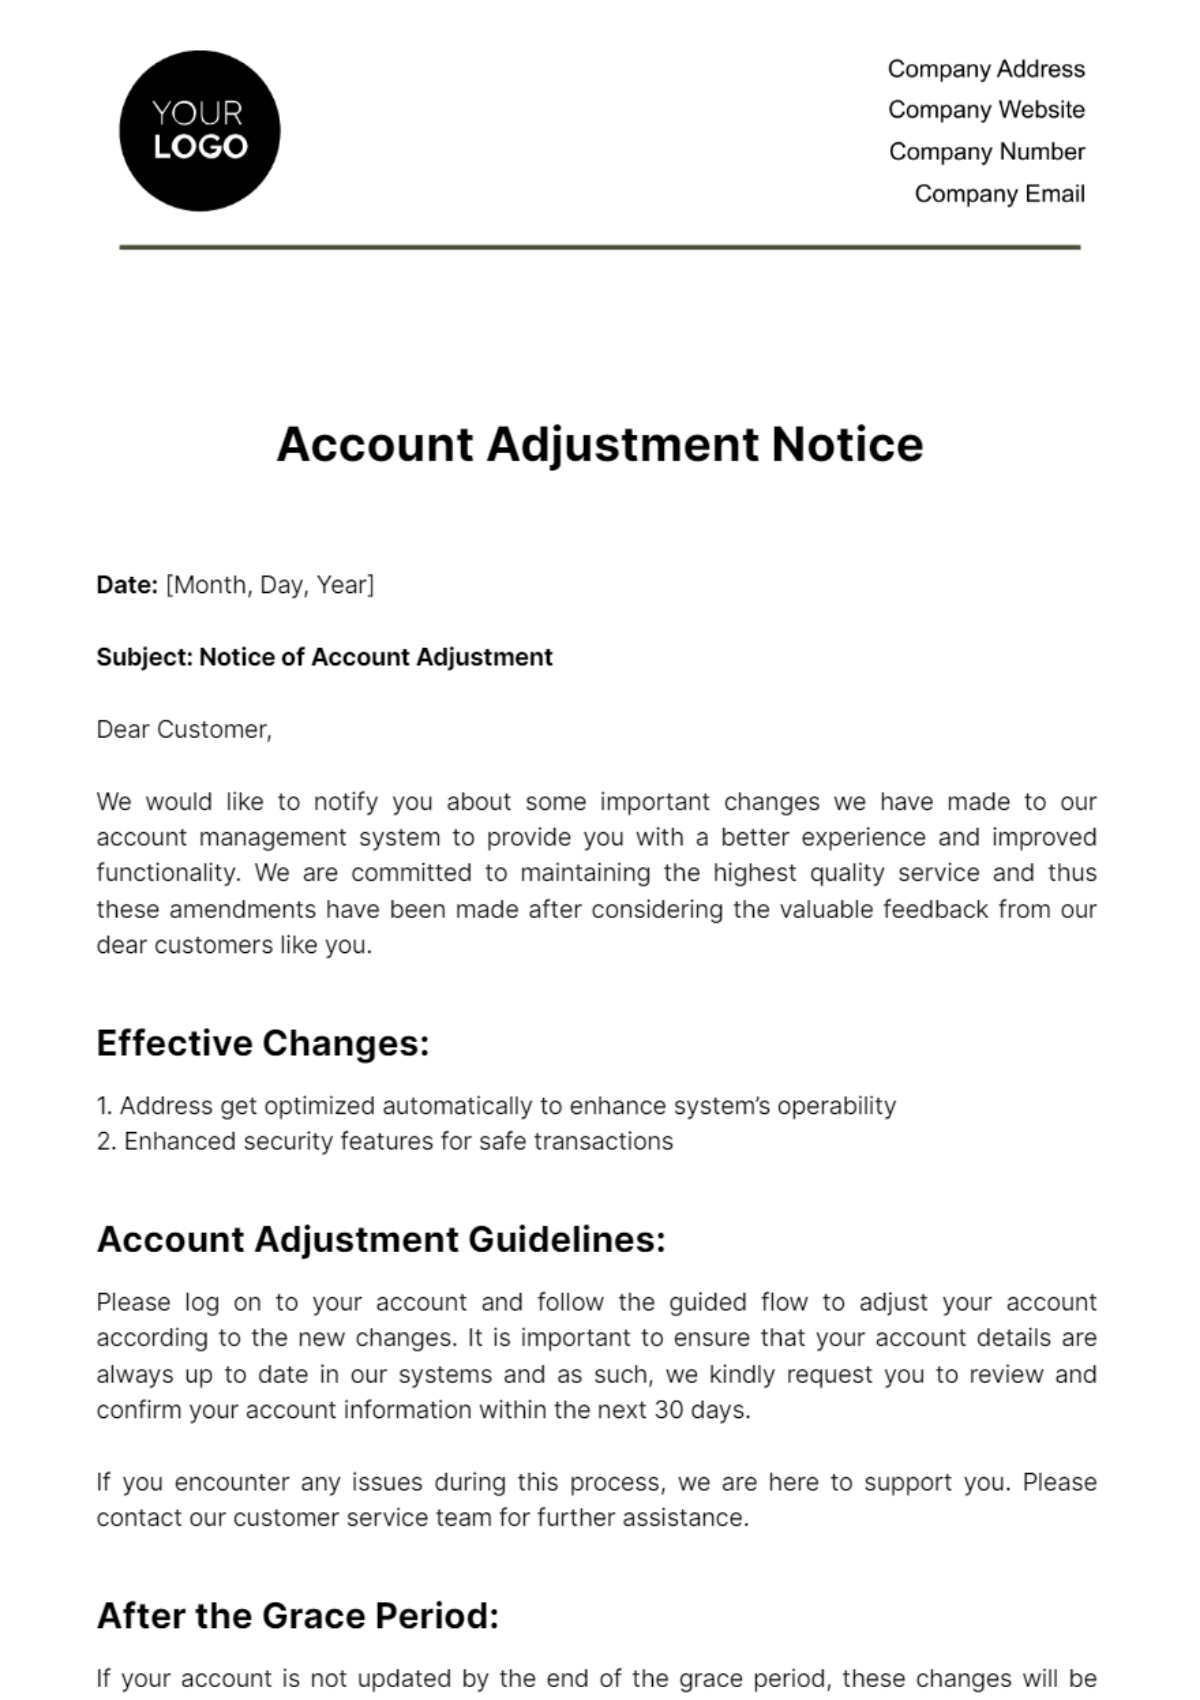 Account Adjustment Notice Template